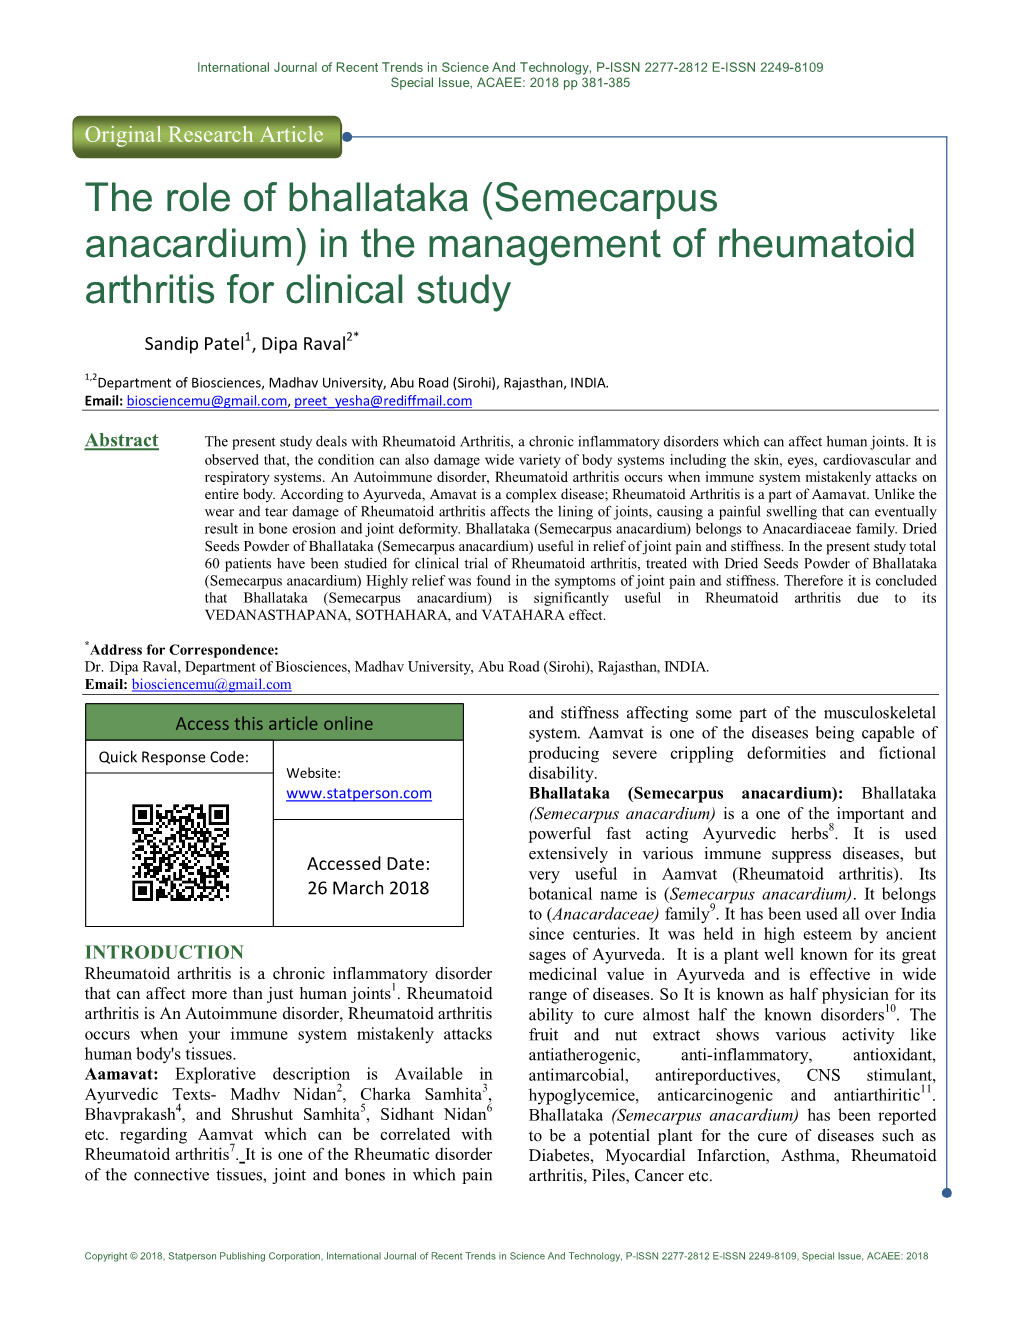 Semecarpus Anacardium) in the Management of Rheumatoid Arthritis for Clinical Study